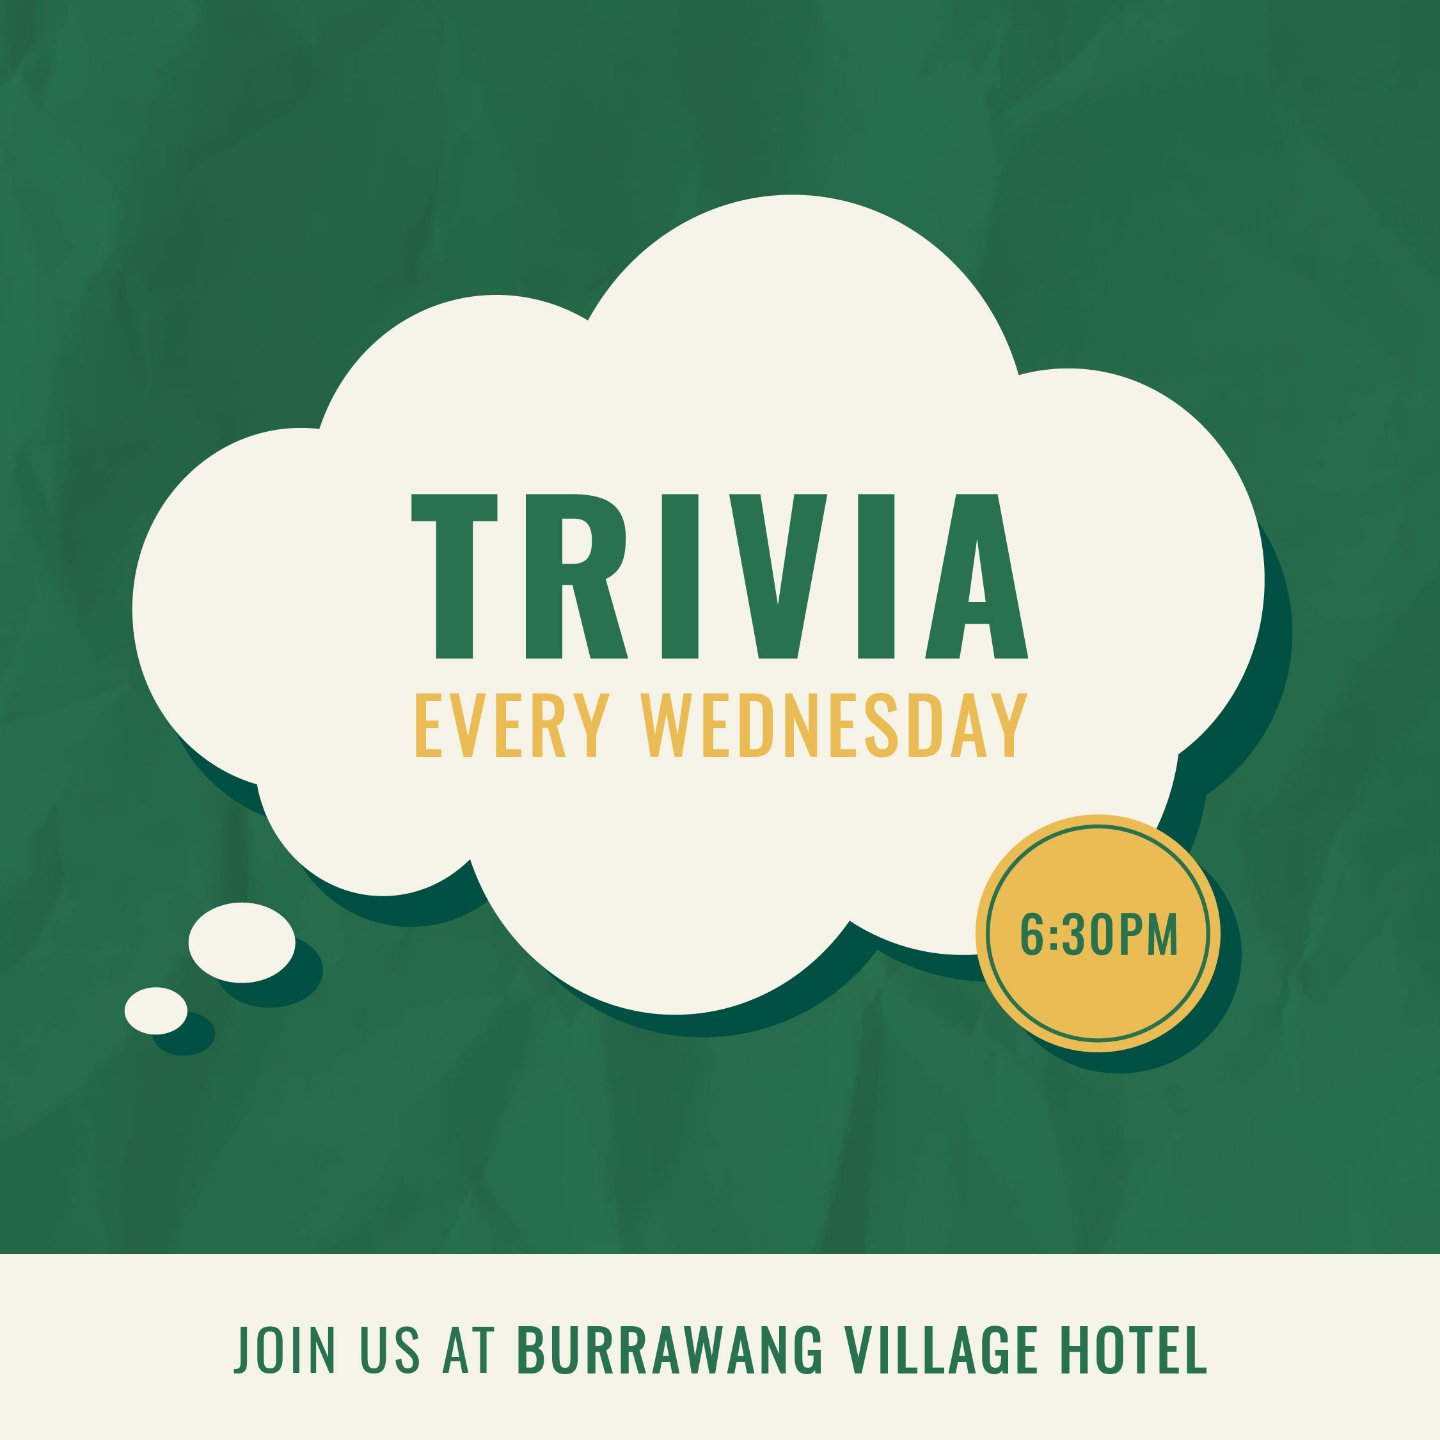 Be smart &amp; enjoy Wednesday Trivia &amp; $20 Rump

#thewang
#burrawangvillagehotel